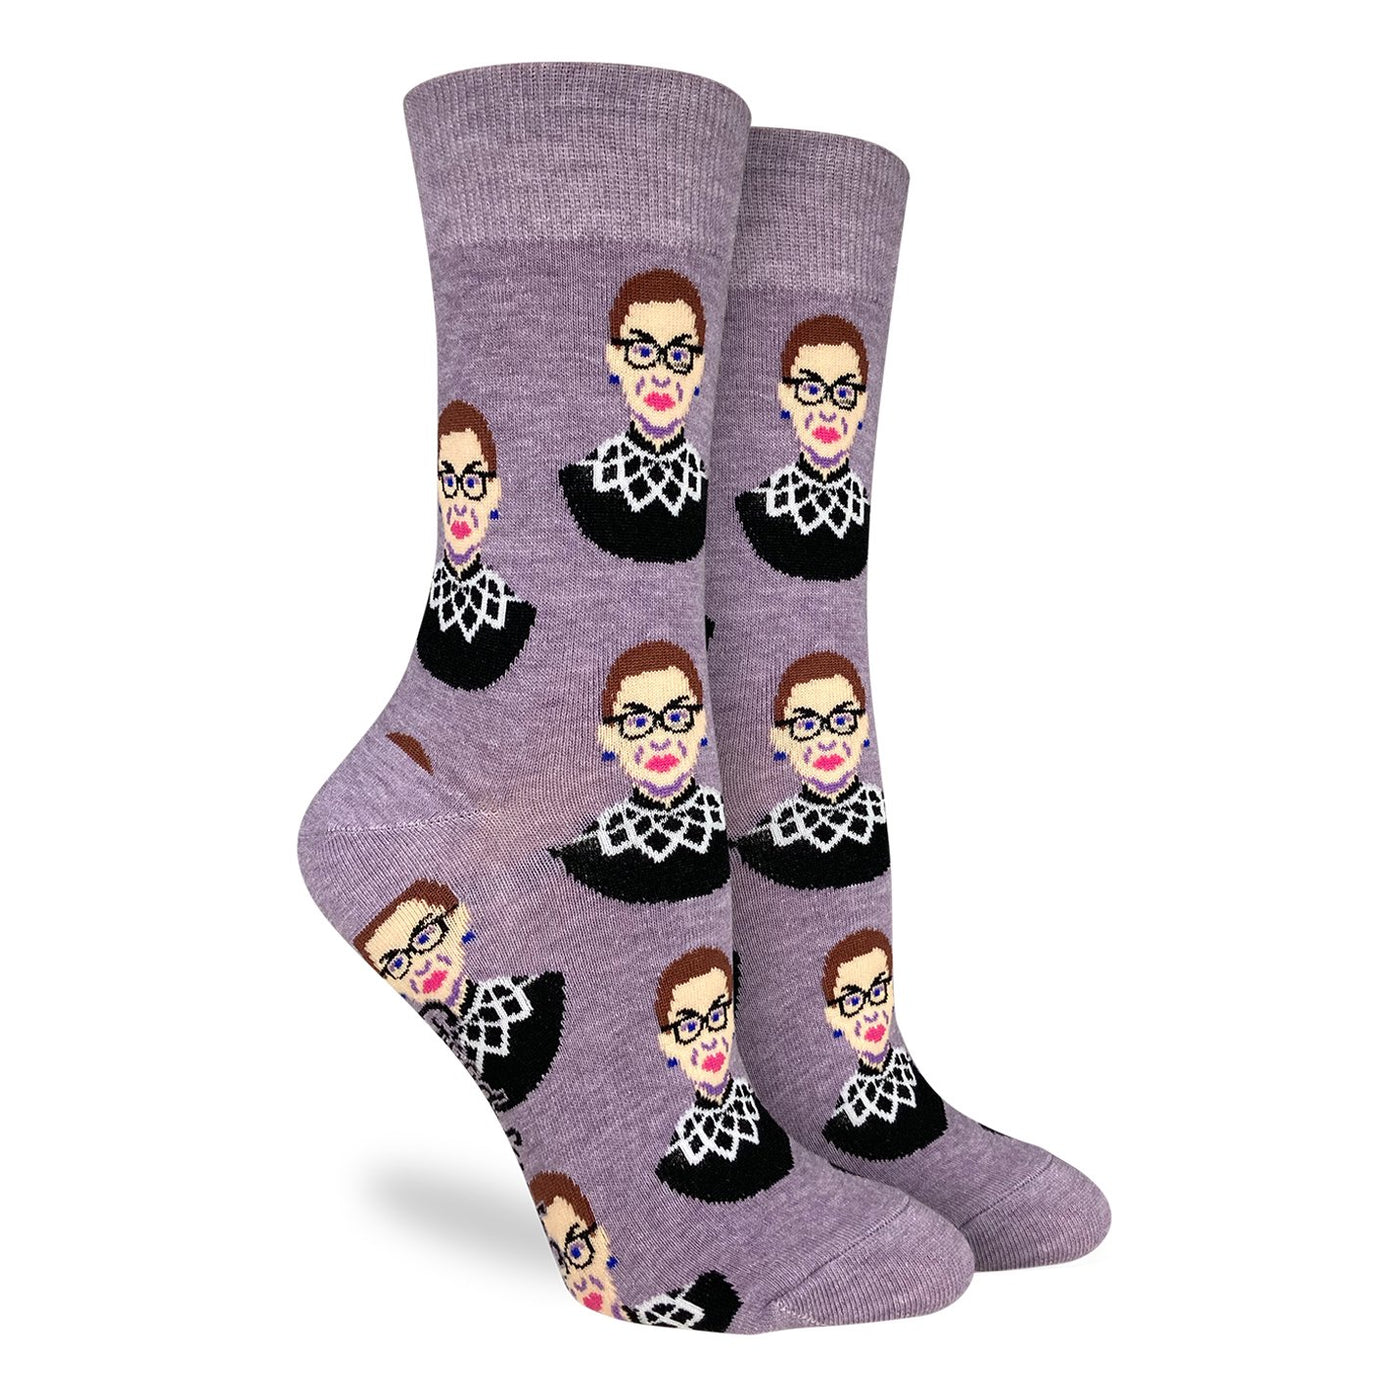 "Ruth Bader Ginsburg" Cotton Crew Socks by Good Luck Sock - Medium